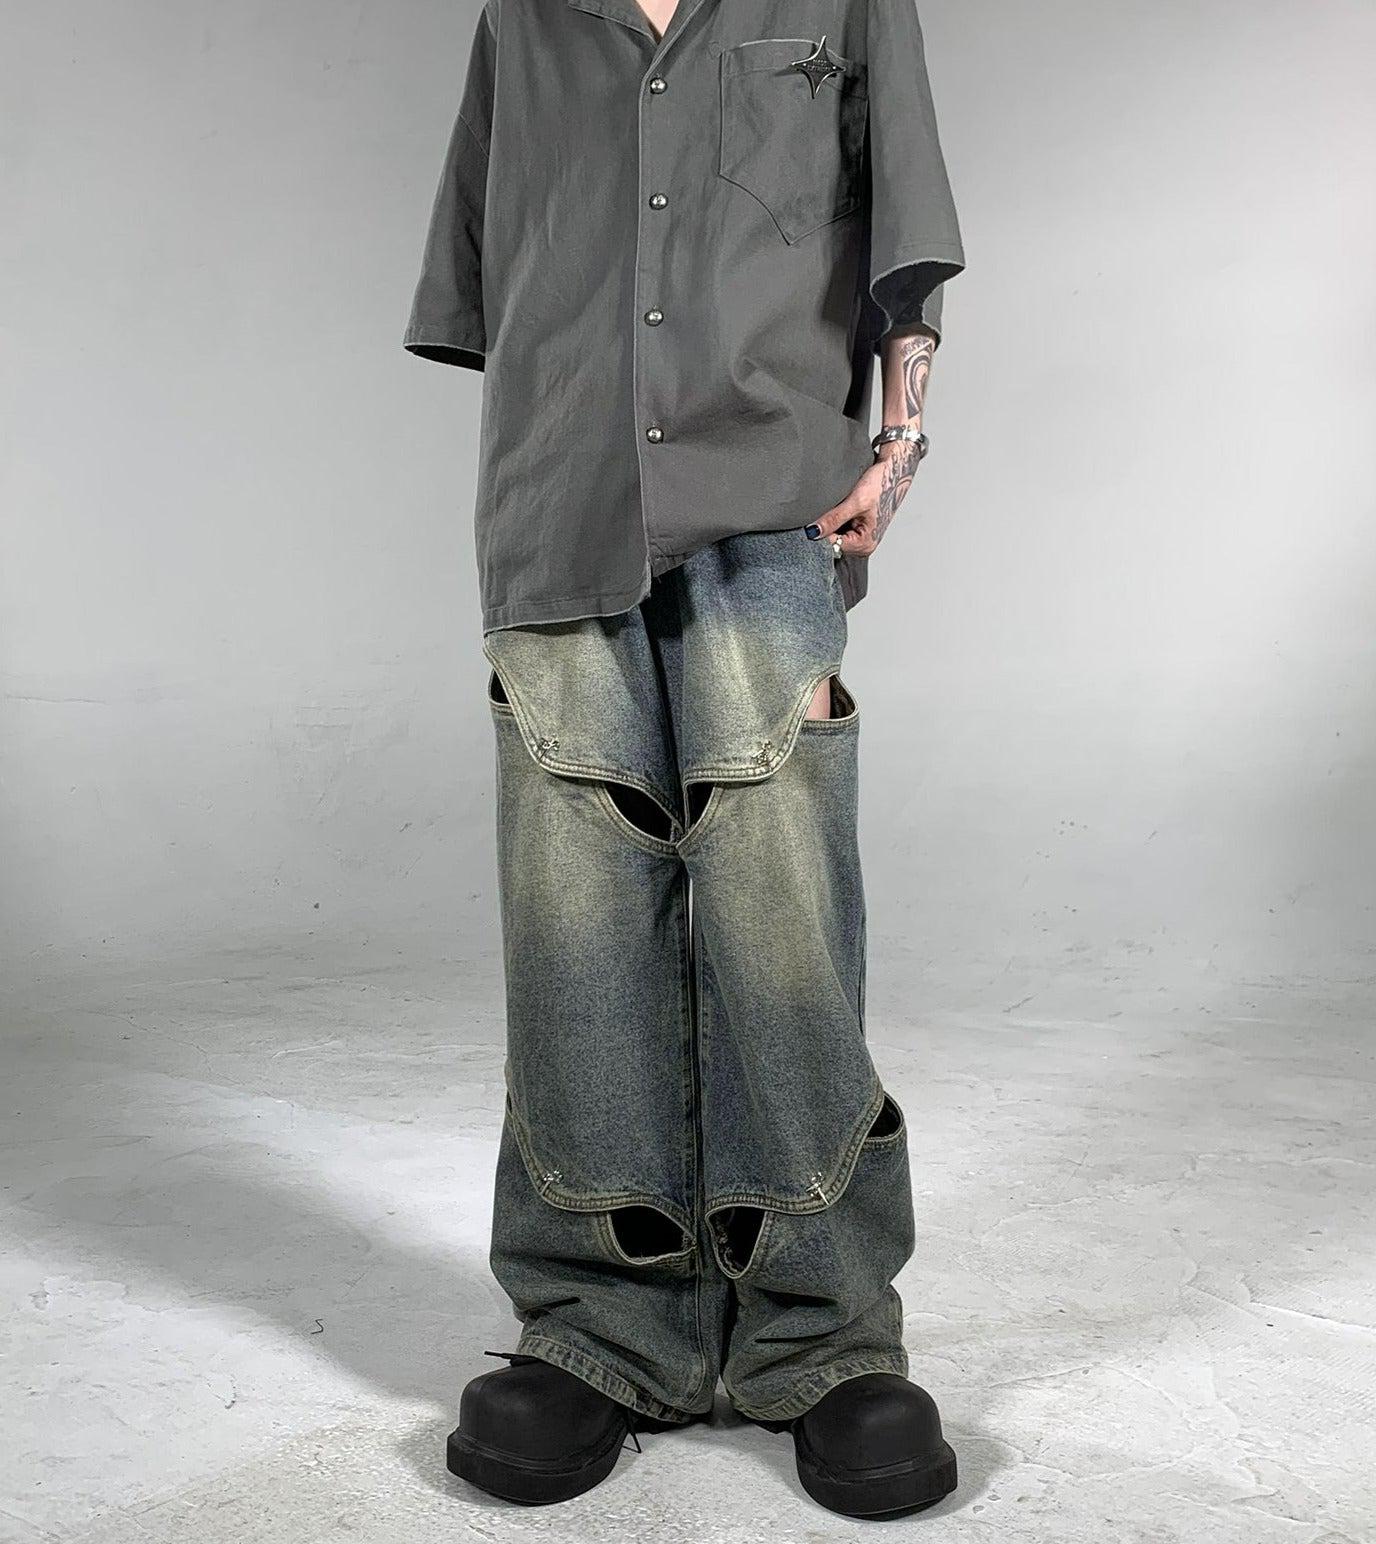 Metal Buckle Irregular Style Jeans Korean Street Fashion Jeans By Ash Dark Shop Online at OH Vault